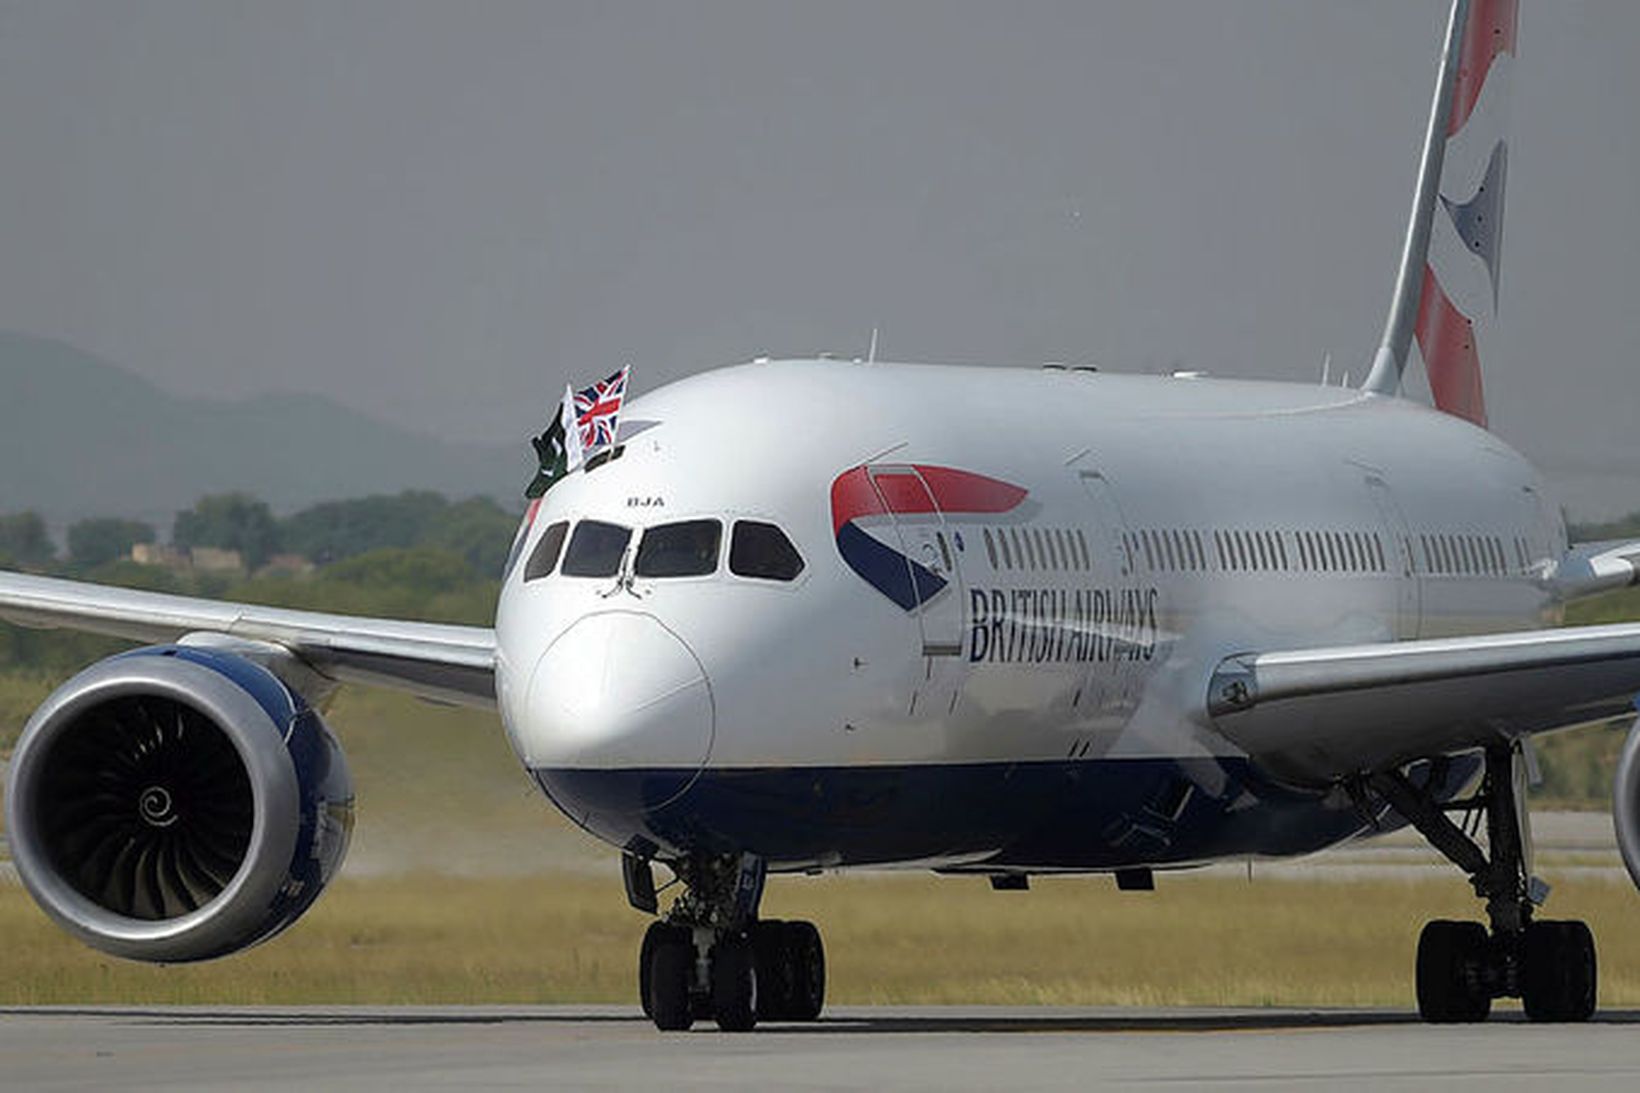 Flugvél British Airways.